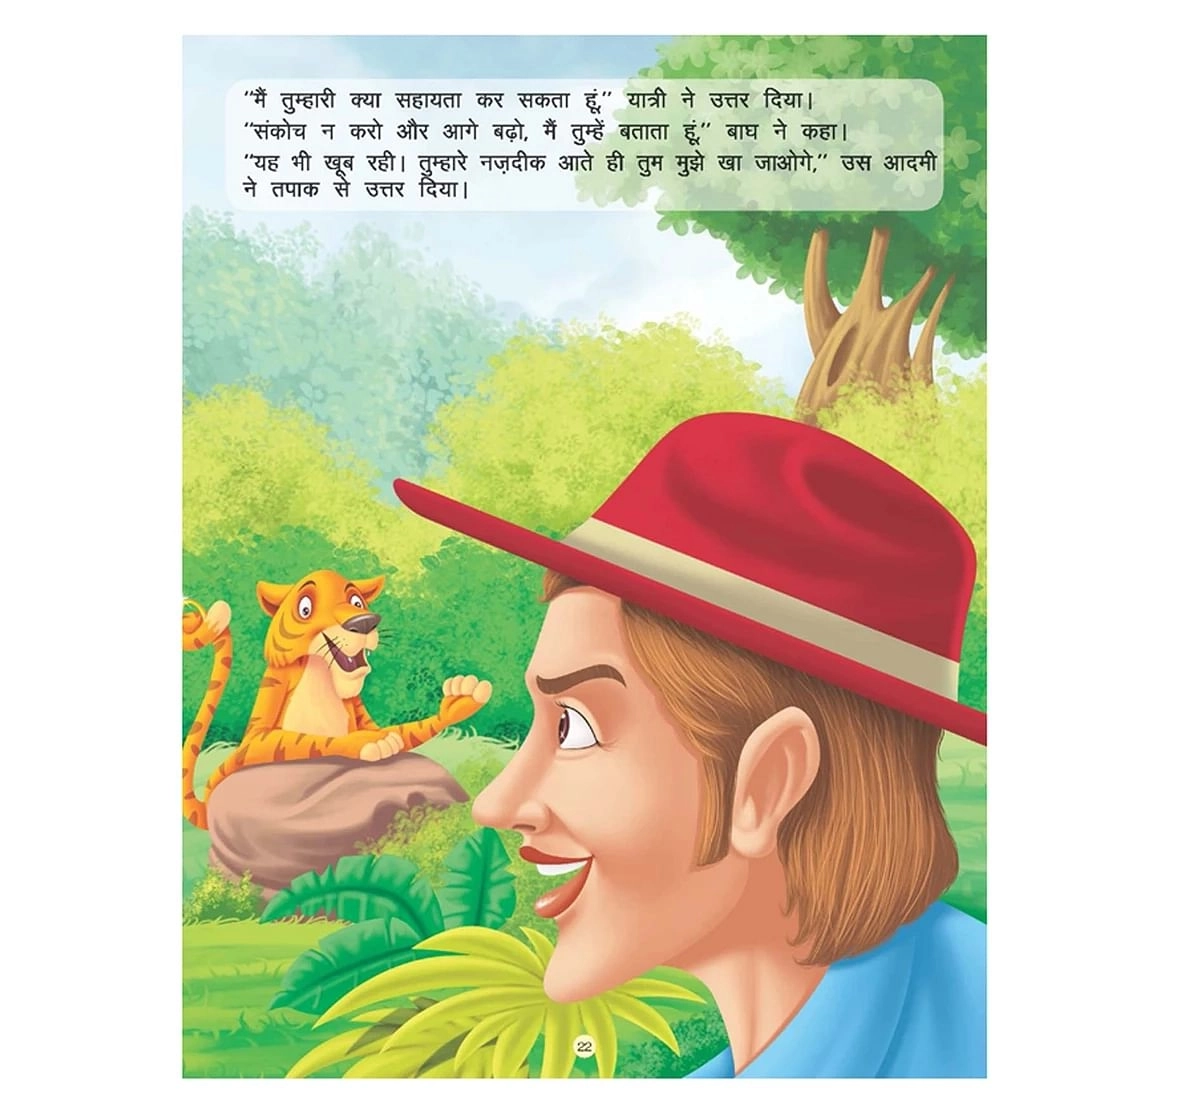 Dreamland Paper Back So Ke Khet Panchtantra Ki Kahaniyan Story Books for kids 4Y+, Multicolour